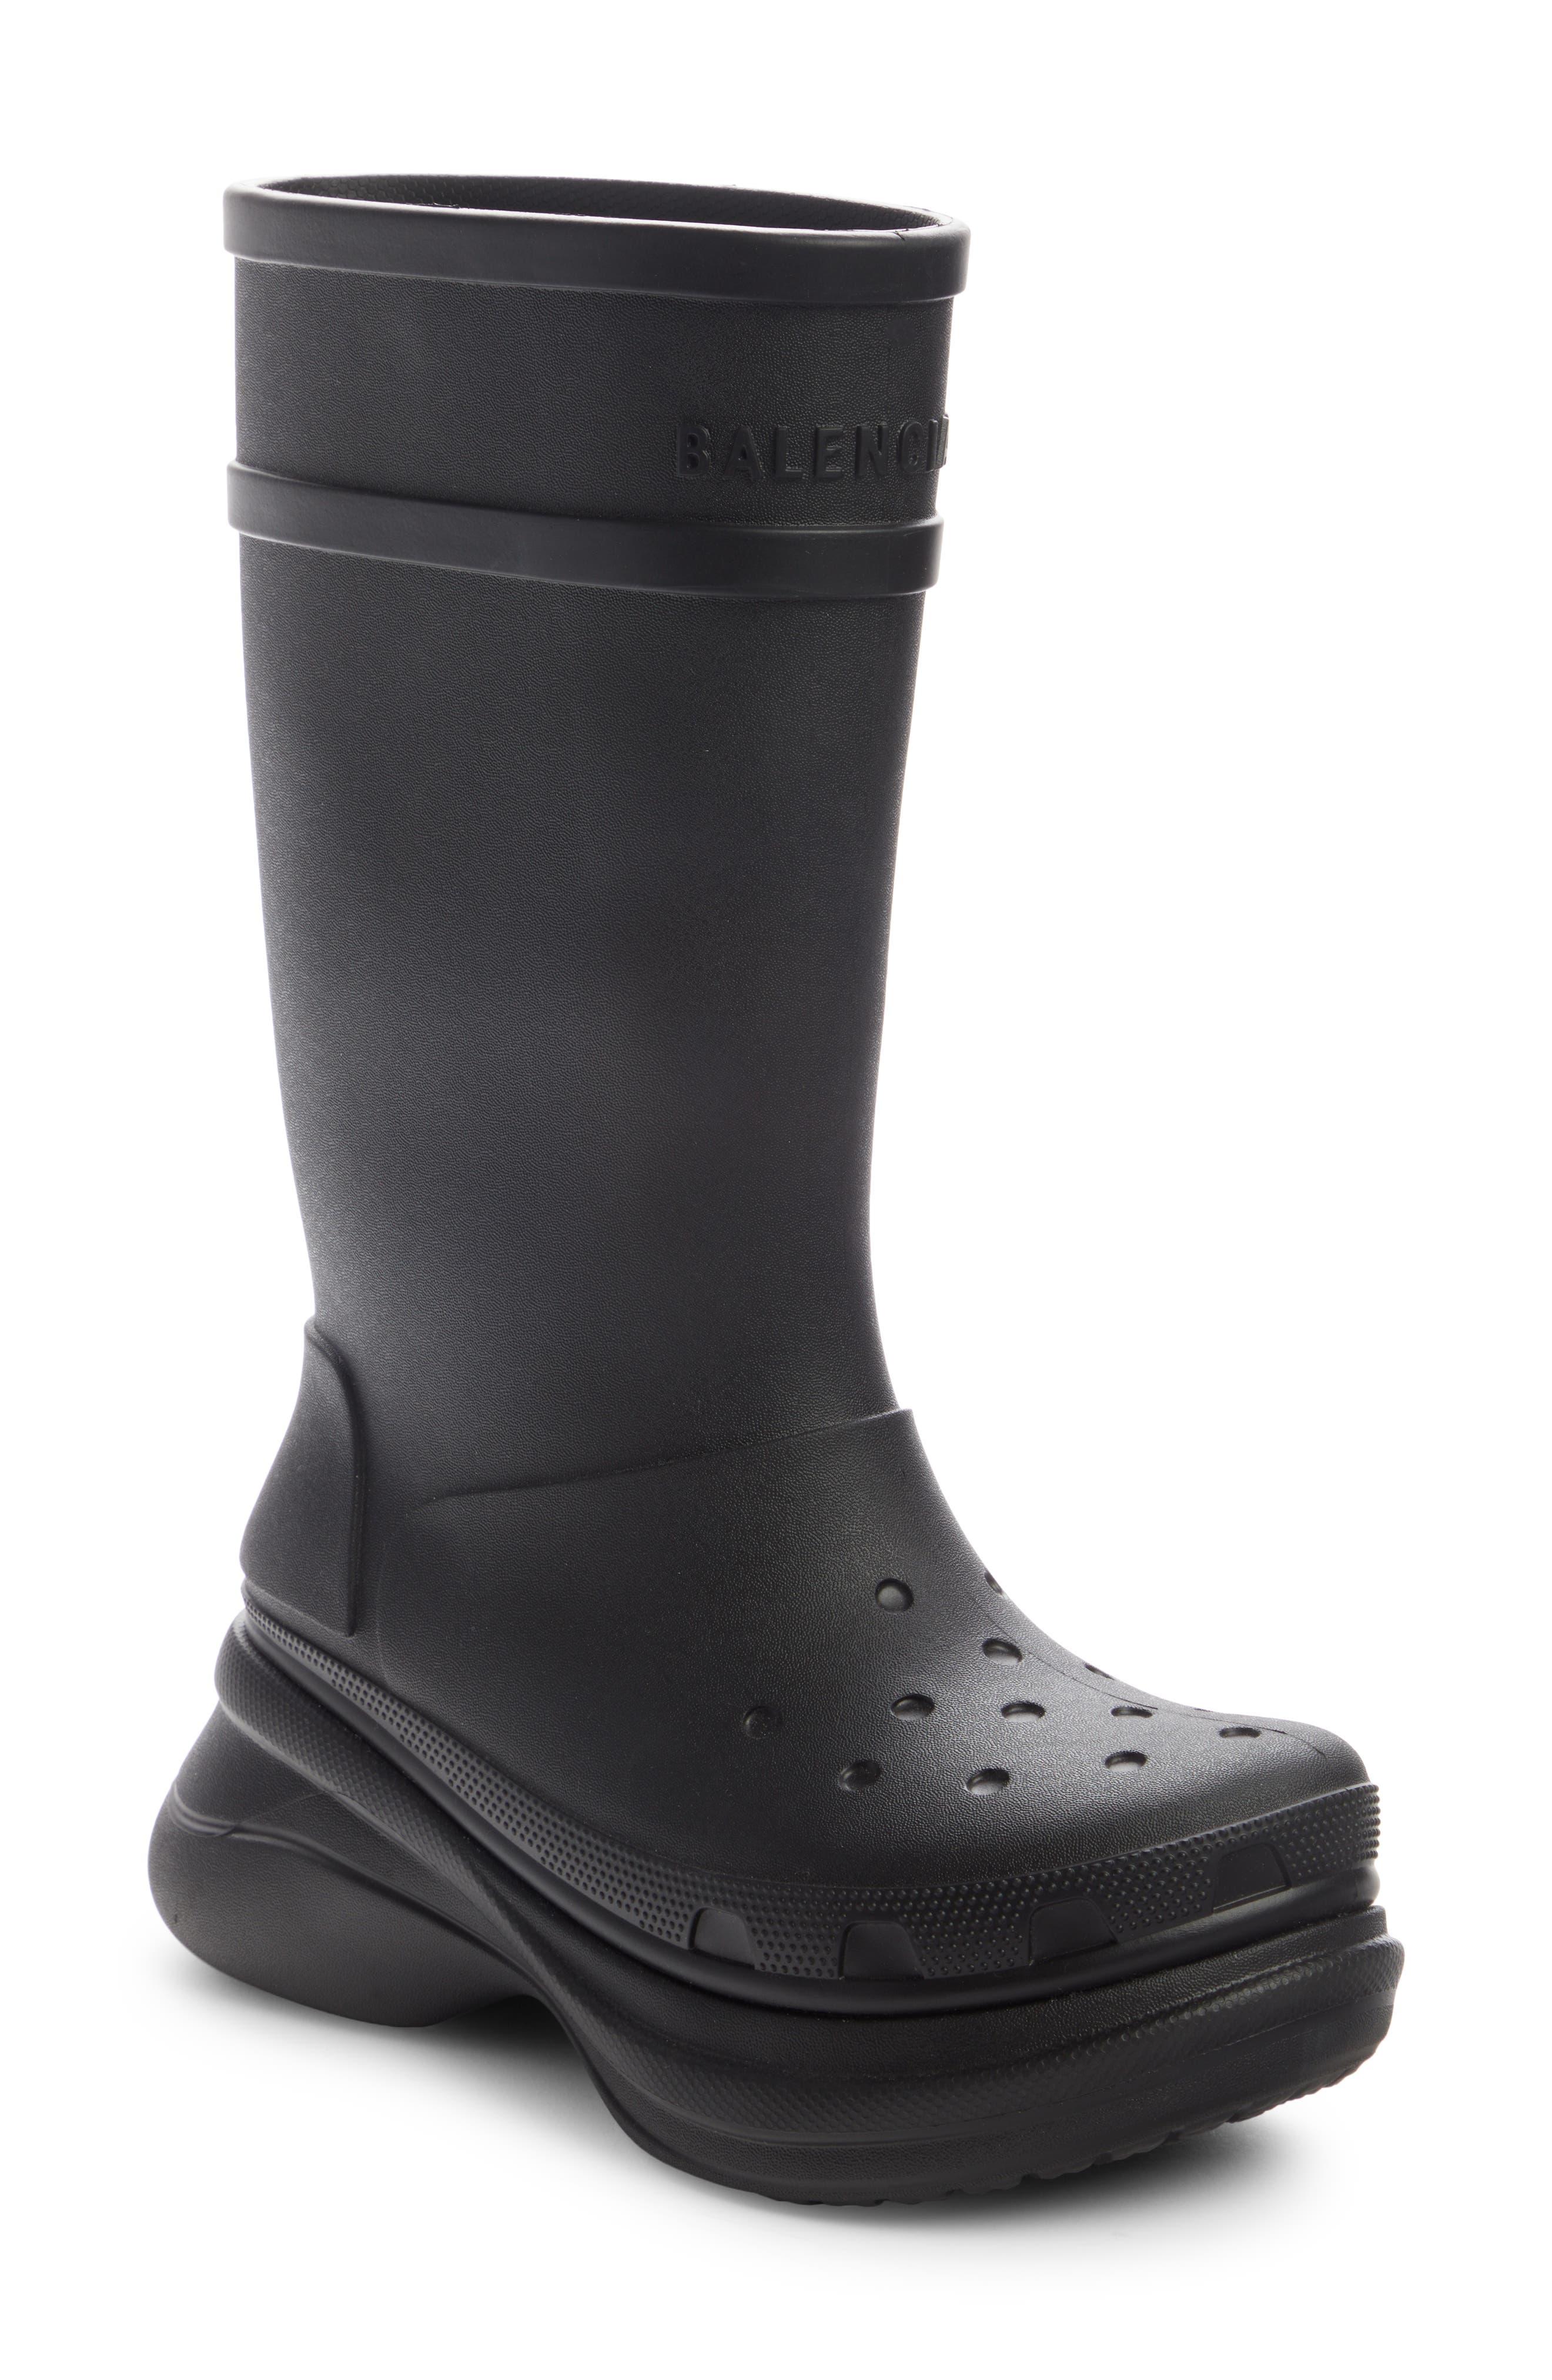 Balenciaga X Crocs Water Resistant Boot in Black | Lyst